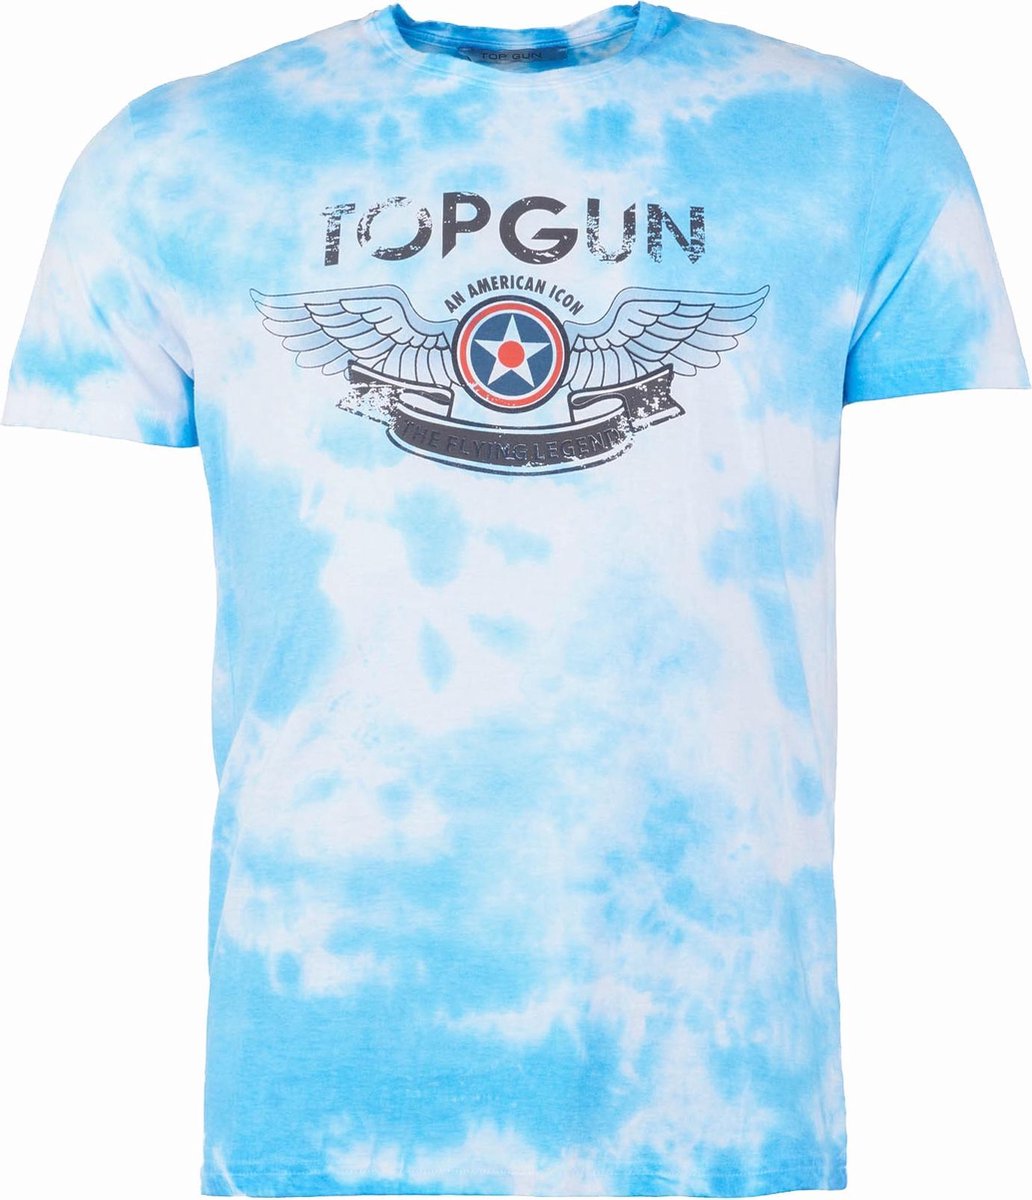 Top Gun ® T-Shirt American Icon camouflage (XXL)